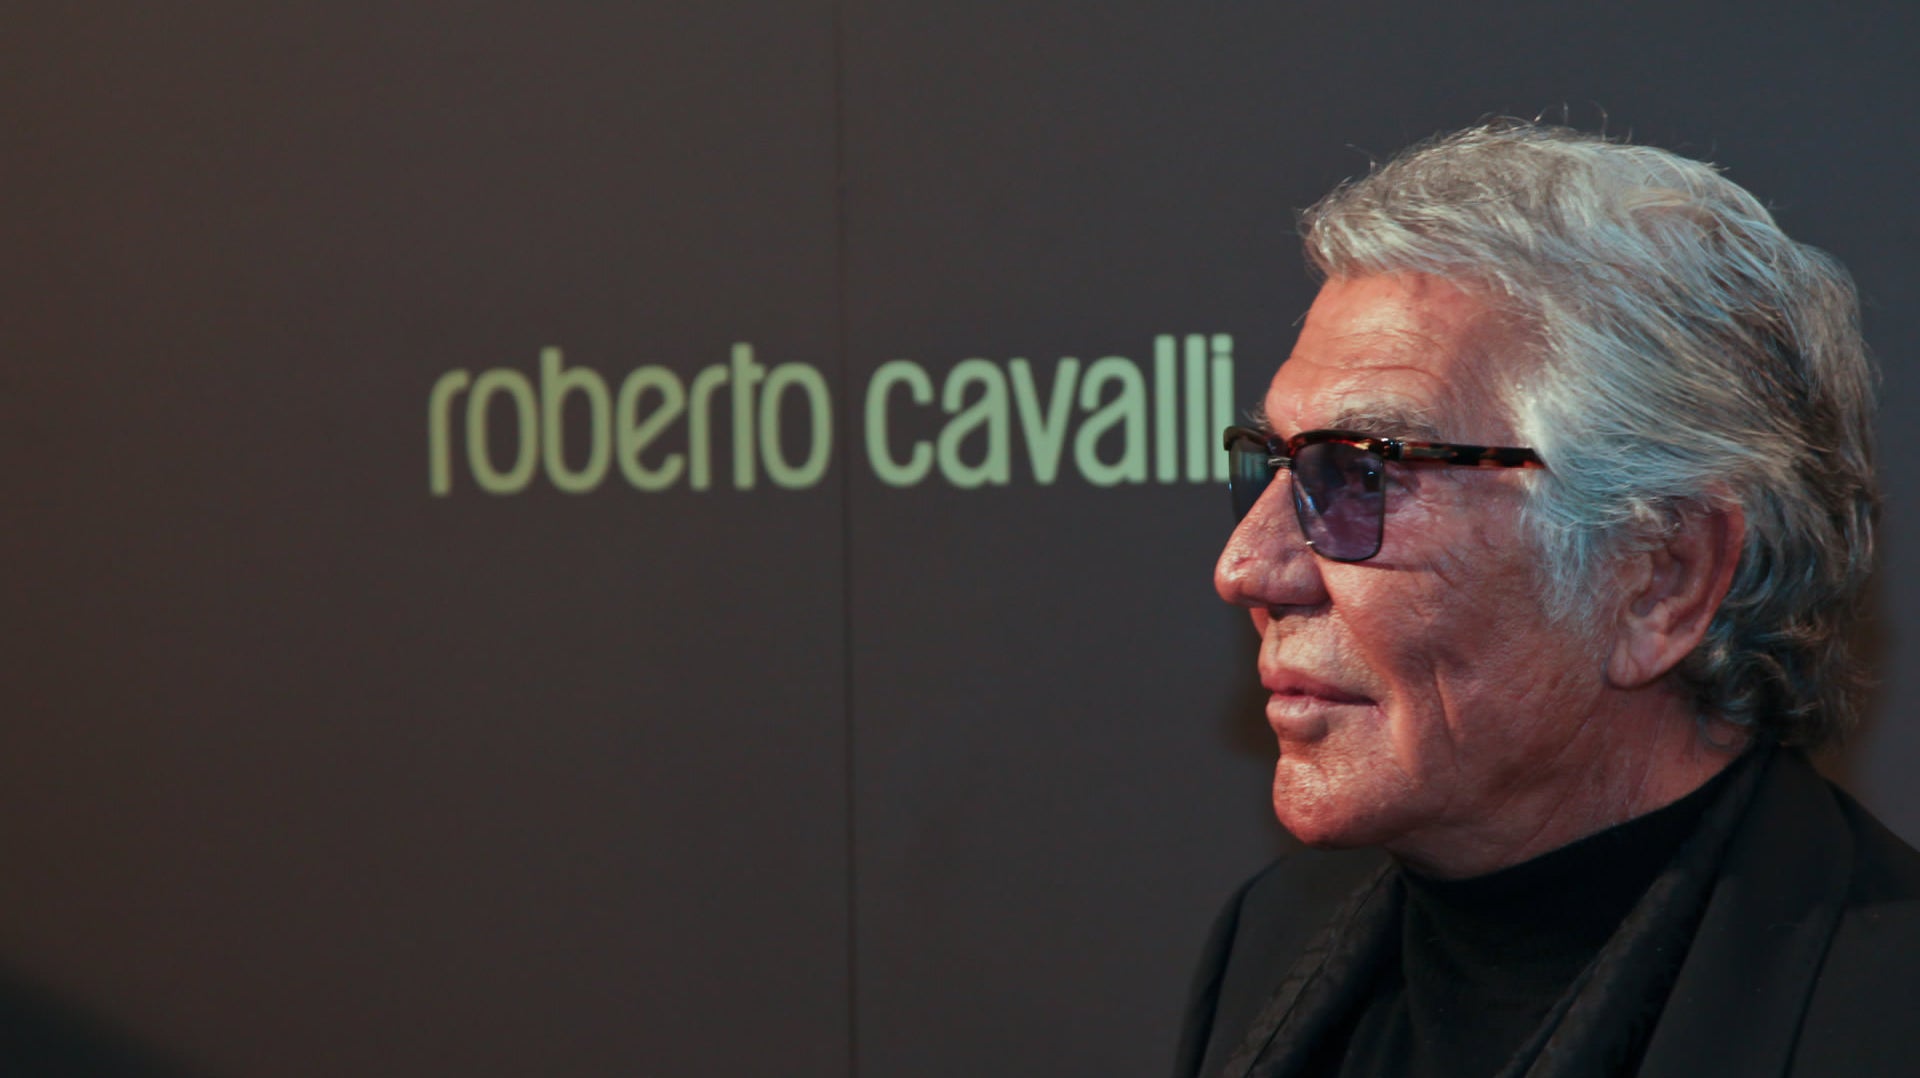 HISTORY OF ROBERTO CAVALLI